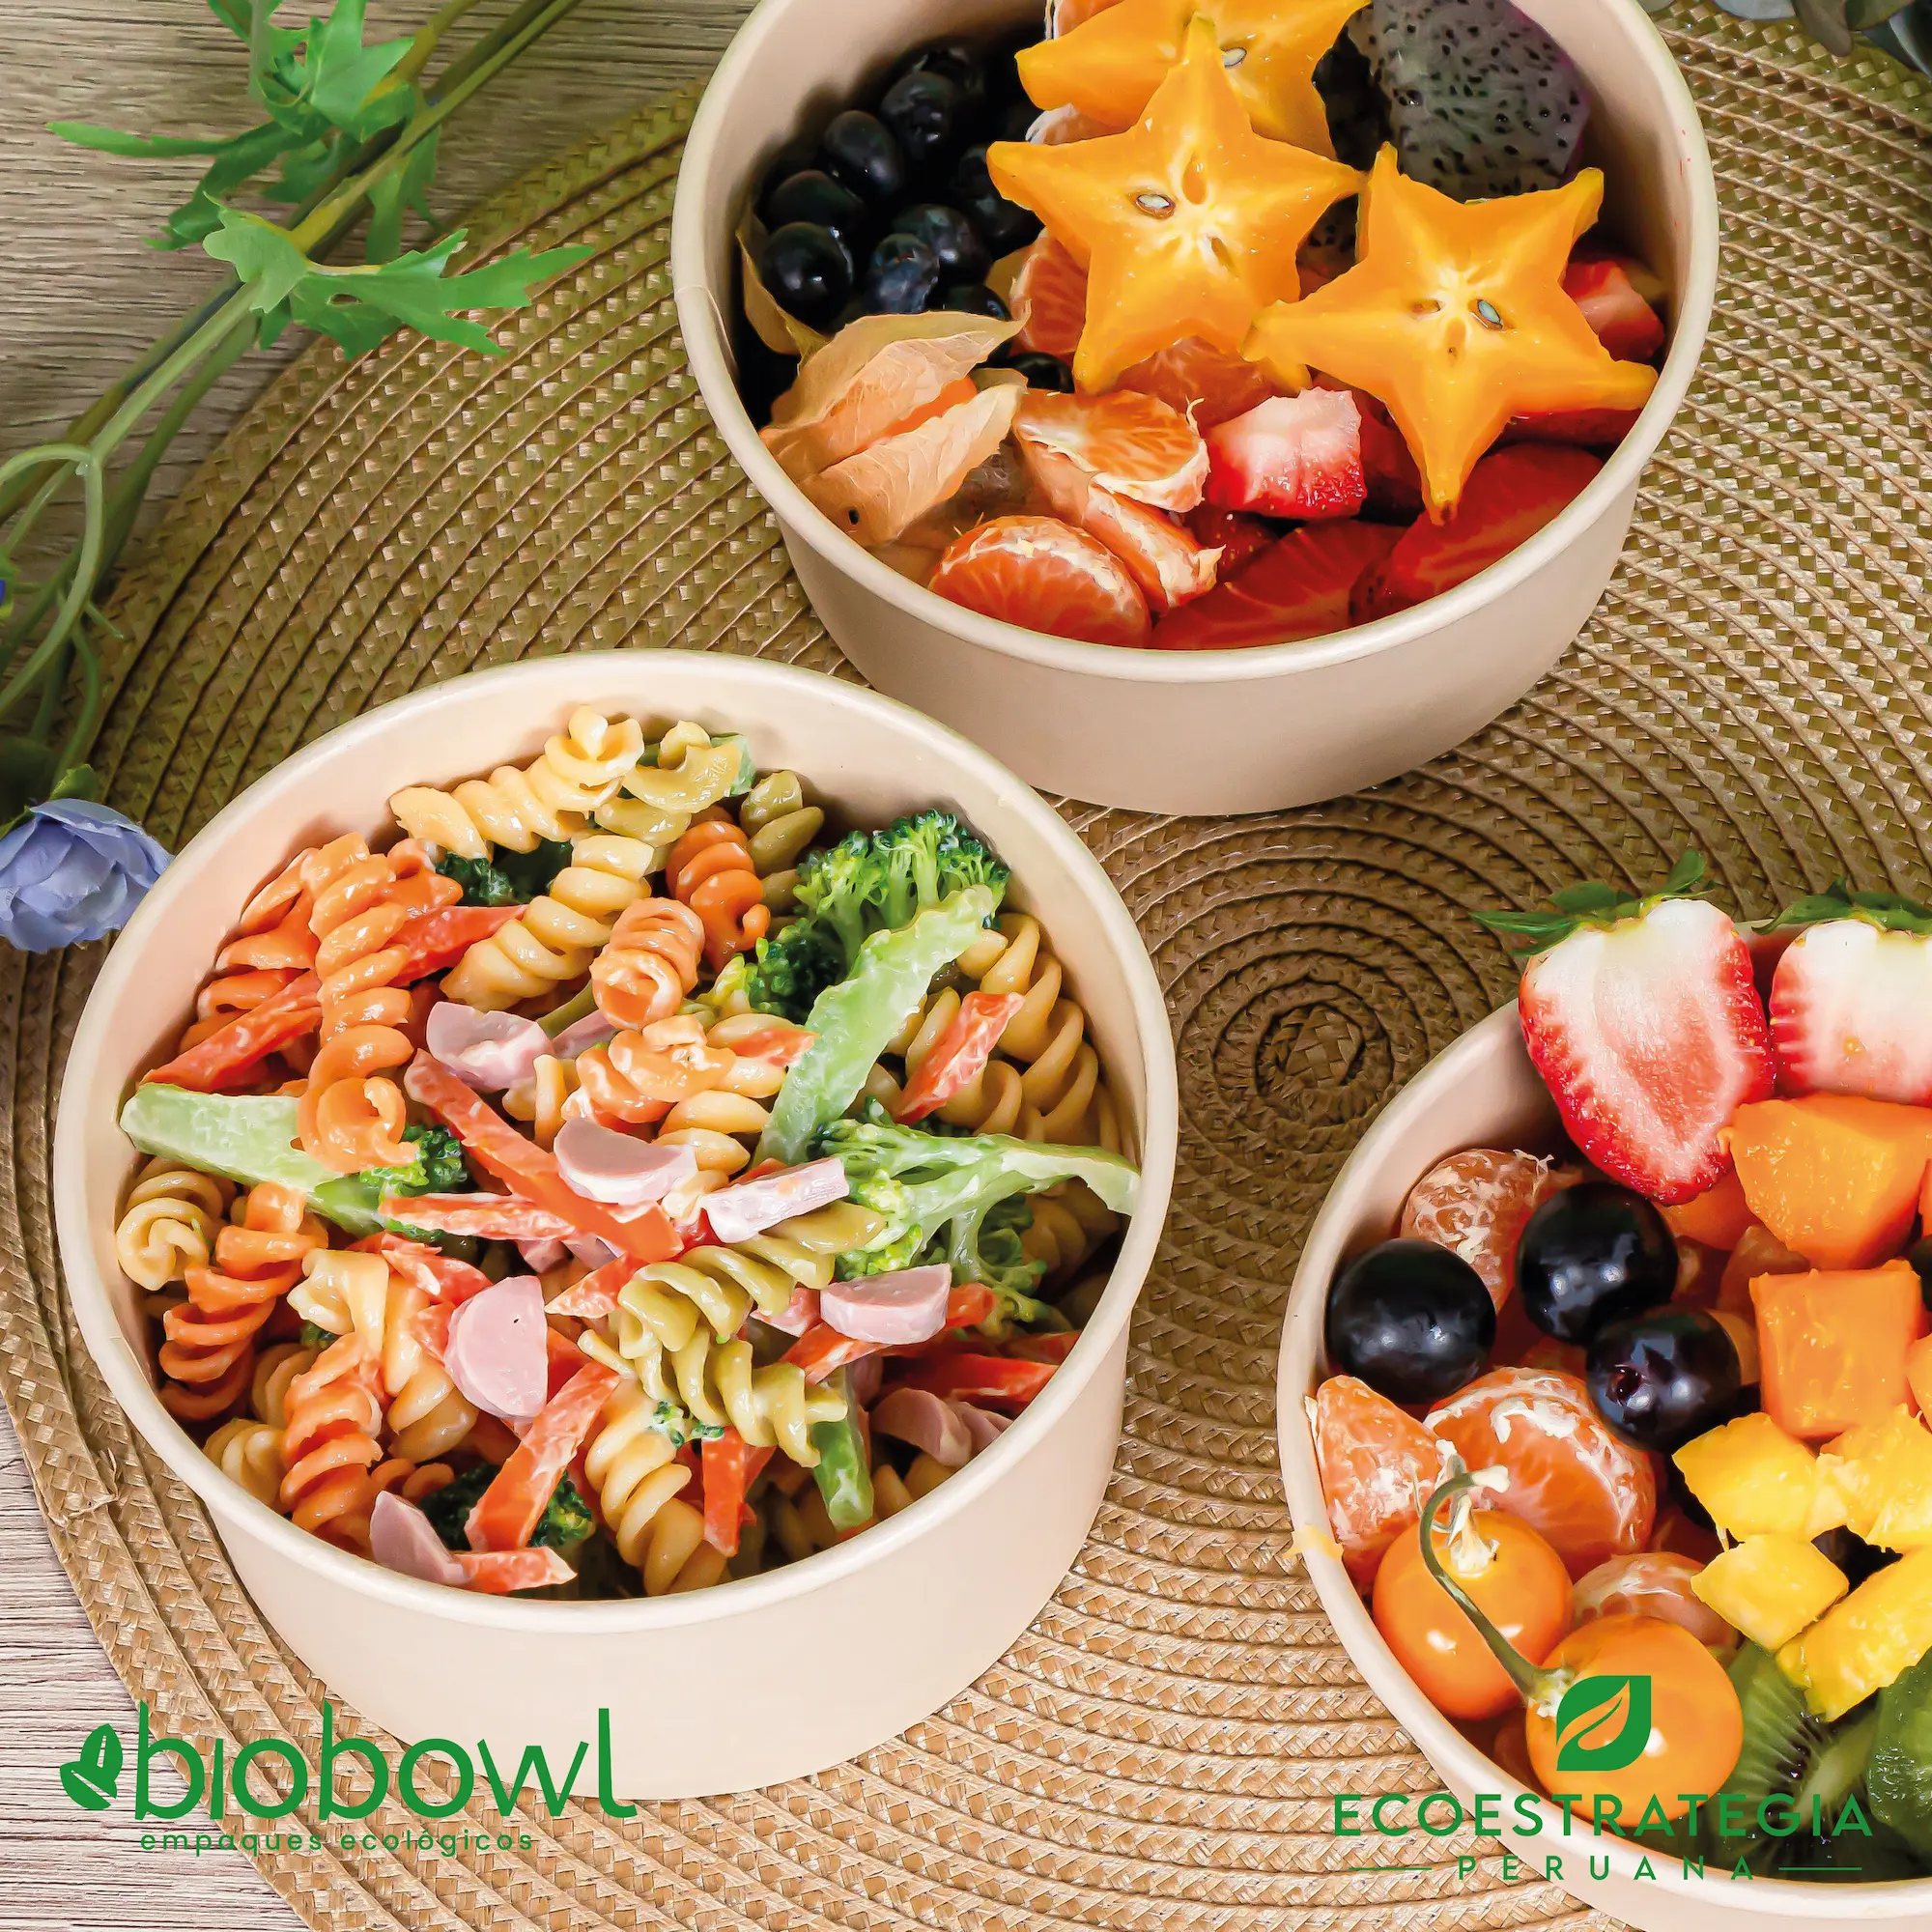 Este bowl biodegradable de 750 ml es a base de fibra de bambu. Envases descartables con gramaje ideal, cotiza tus empaques, platos y tapers para alimentos